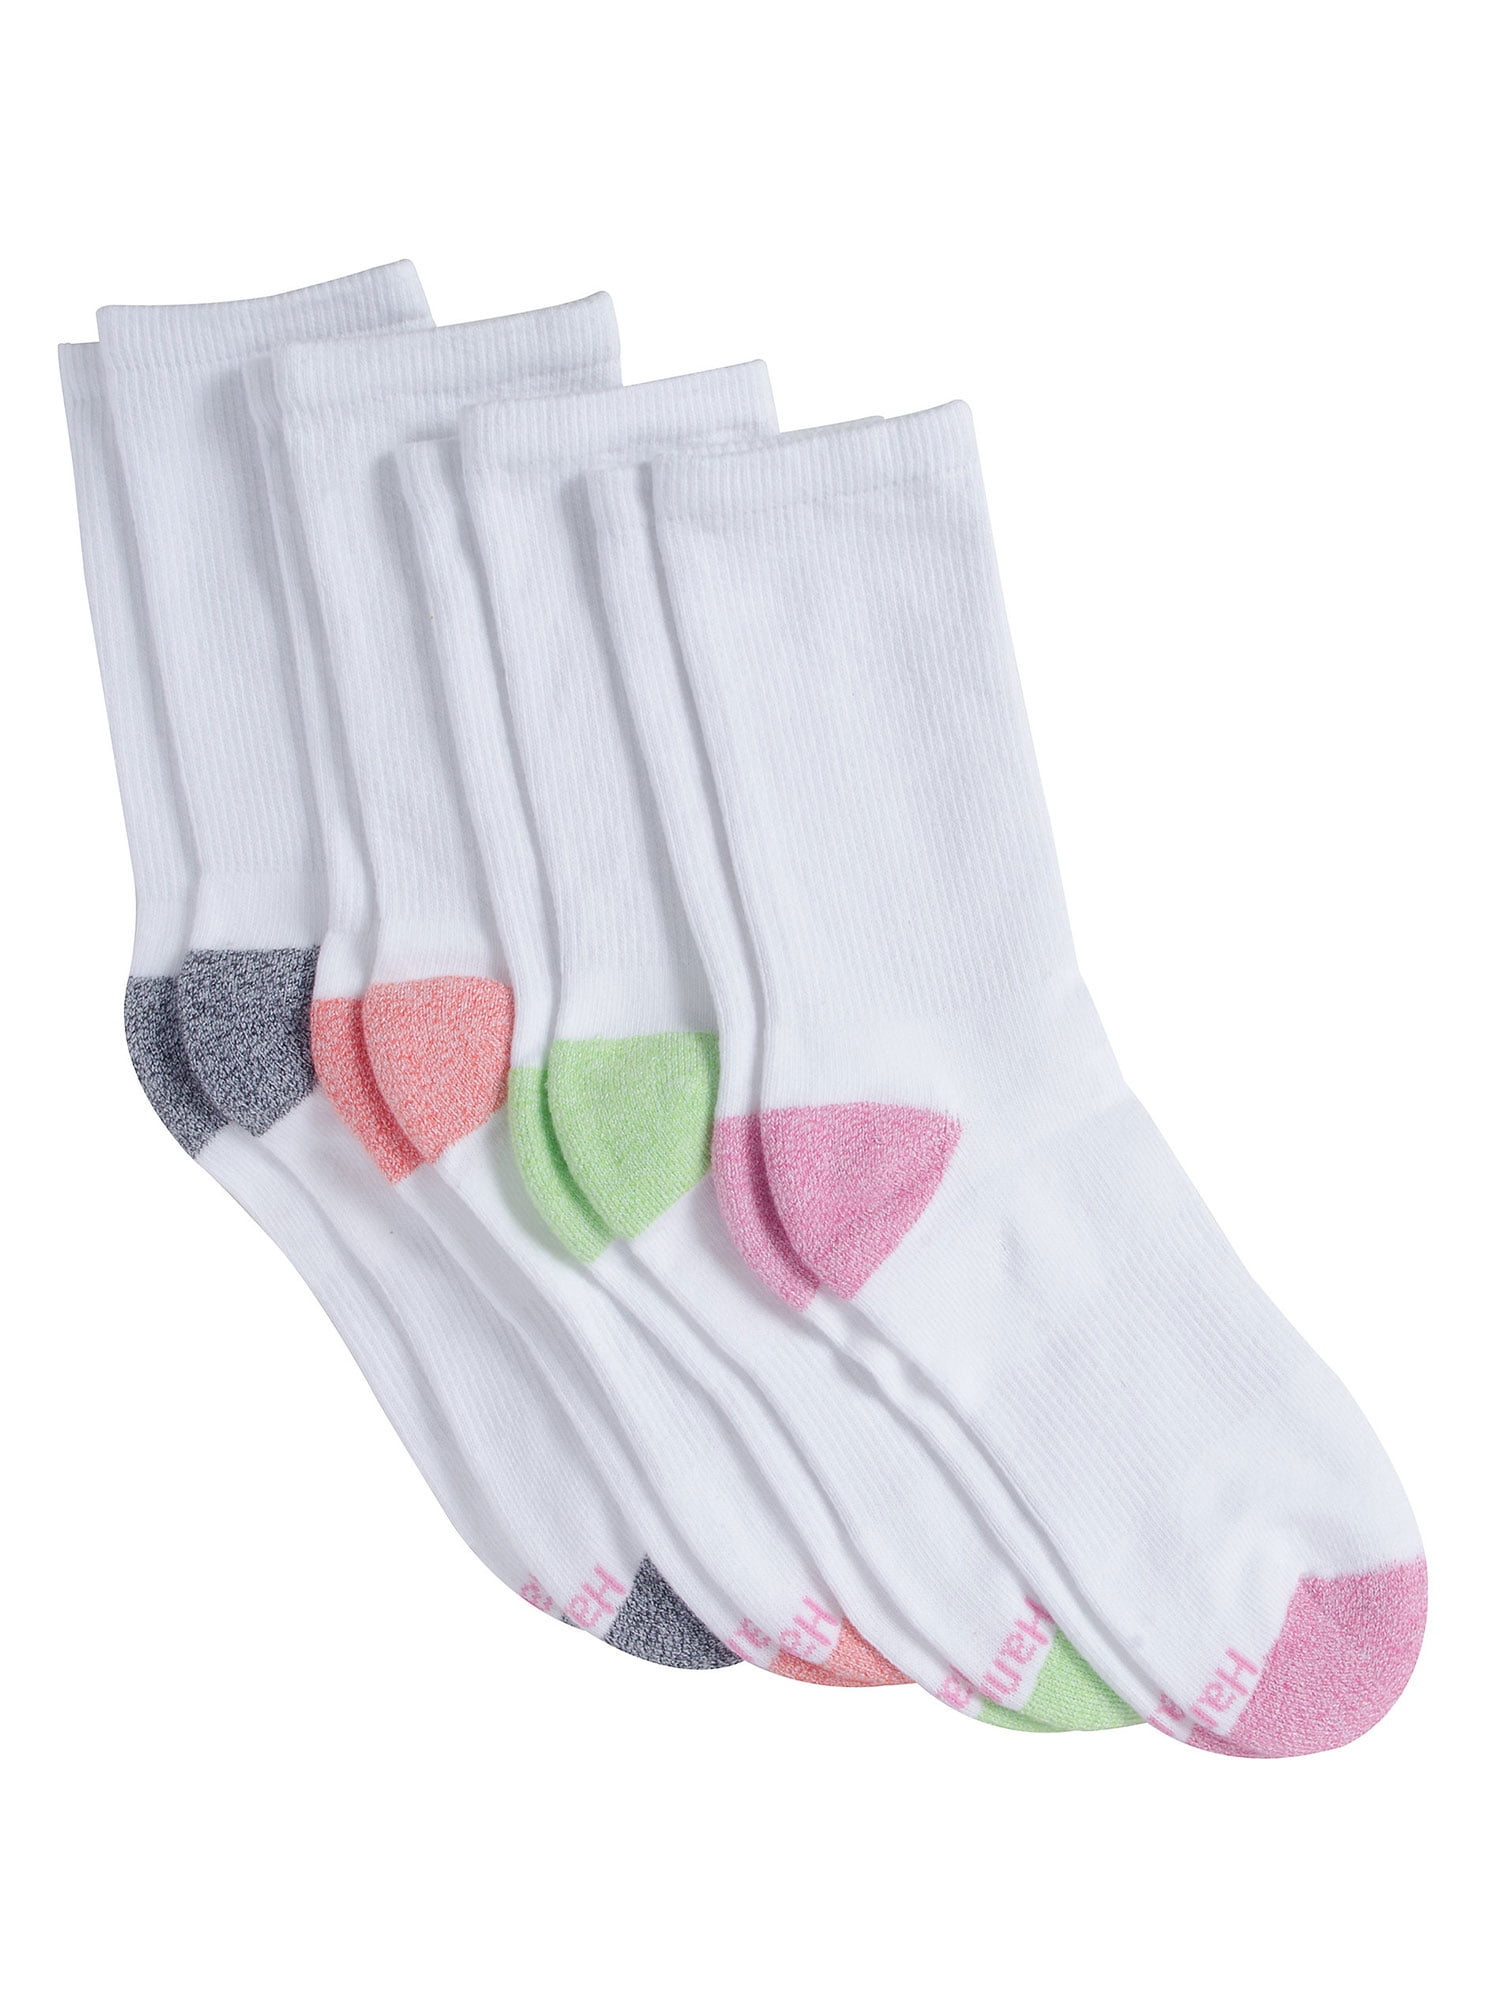 Hanes Comfort Fit Women's Crew Socks, 4-Pairs Assortment 2 5-9